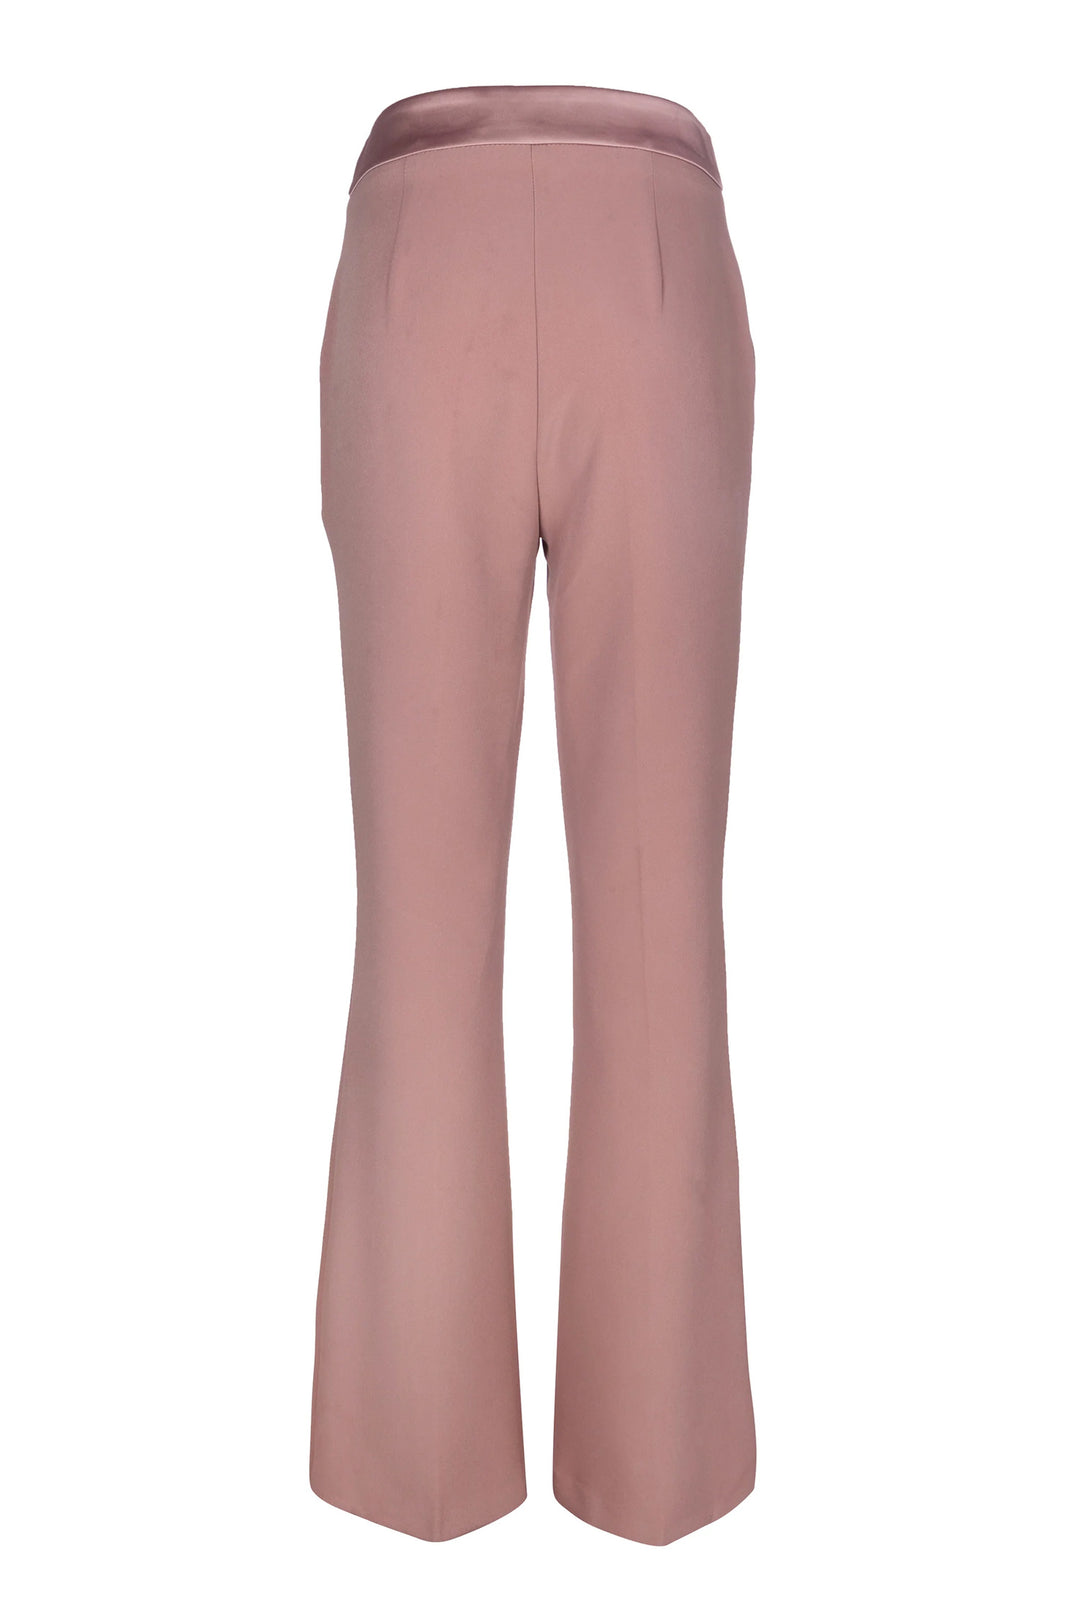 FRACOMINA Pantalone bootcut rosa antico in tessuto tecnico - Mancinelli 1954